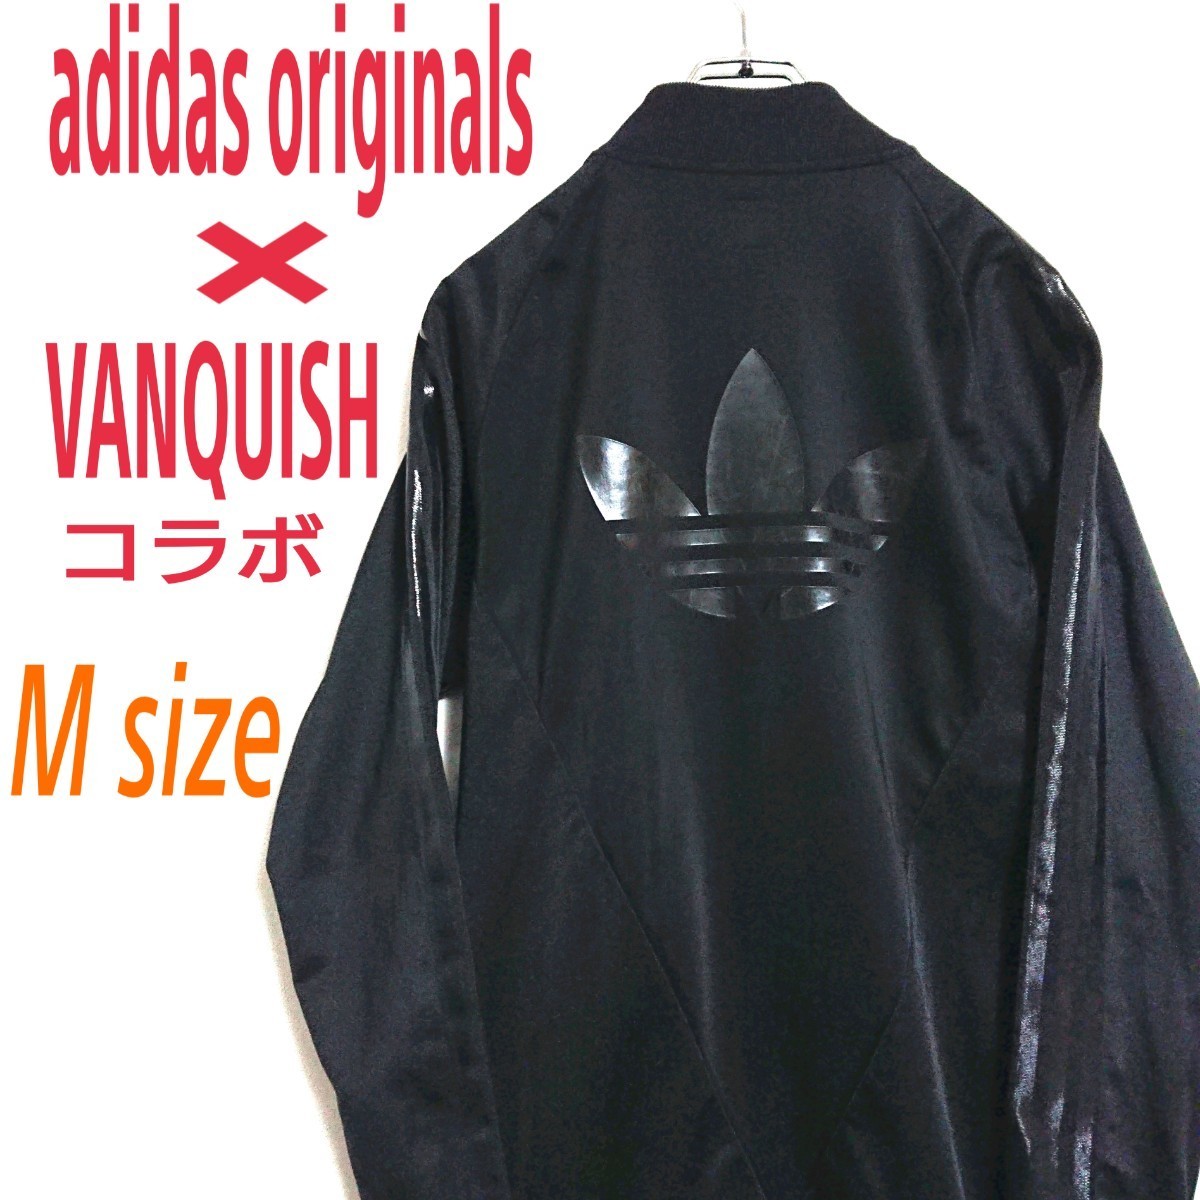 adidas originals アディダスオリジナルス × VANQUISH バンキッシュコラボ 黒色 ビッグロゴ ジャージ トラックジャケット Mサイズ_画像1